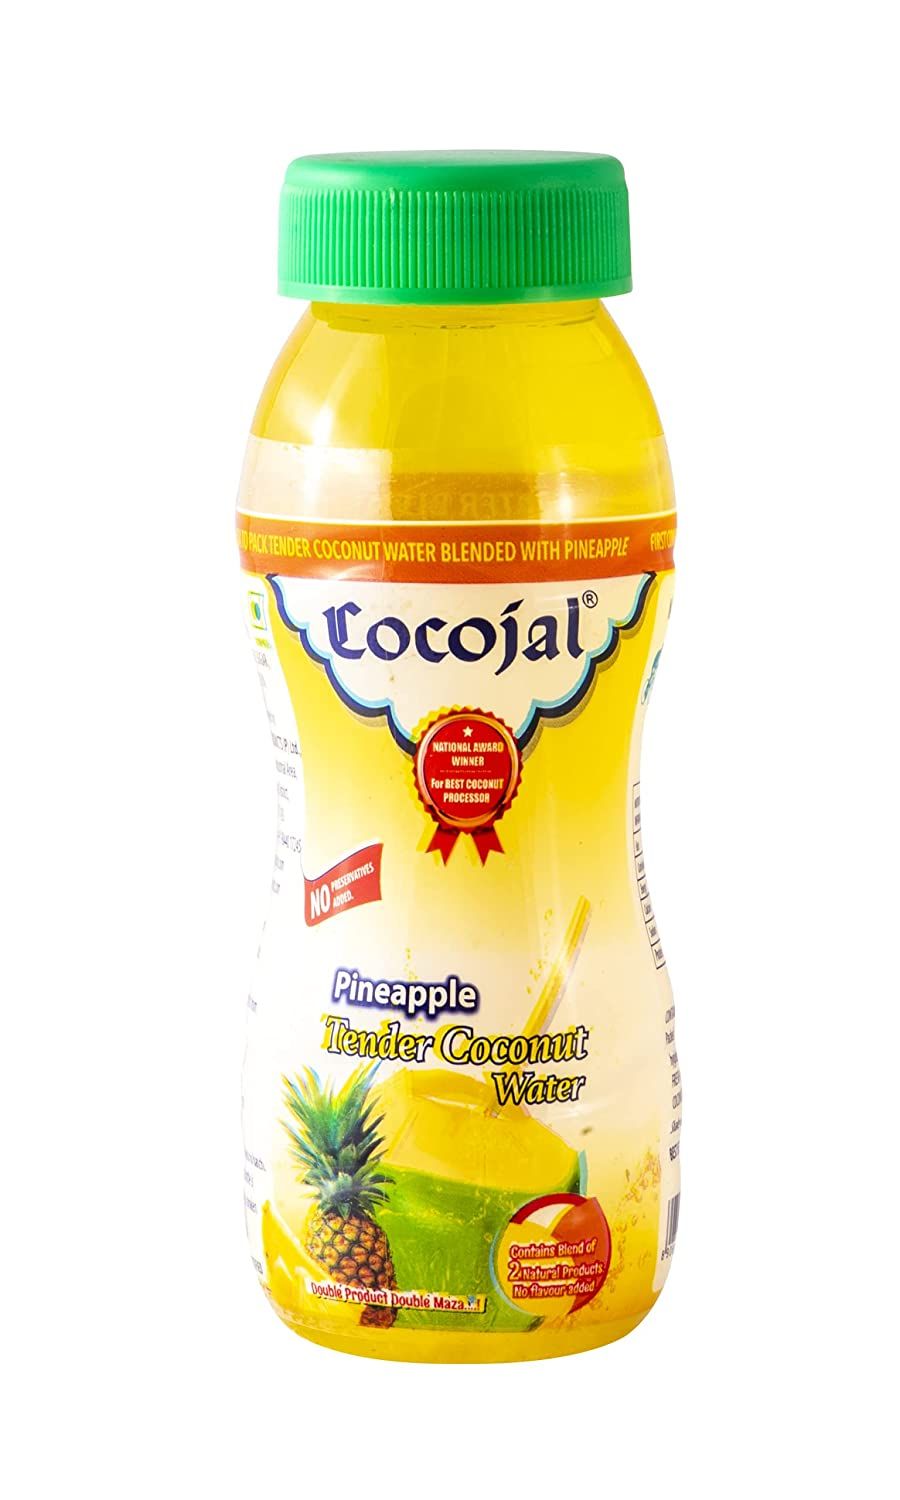 Cocojal Pineapple Tender Coconut Water Image